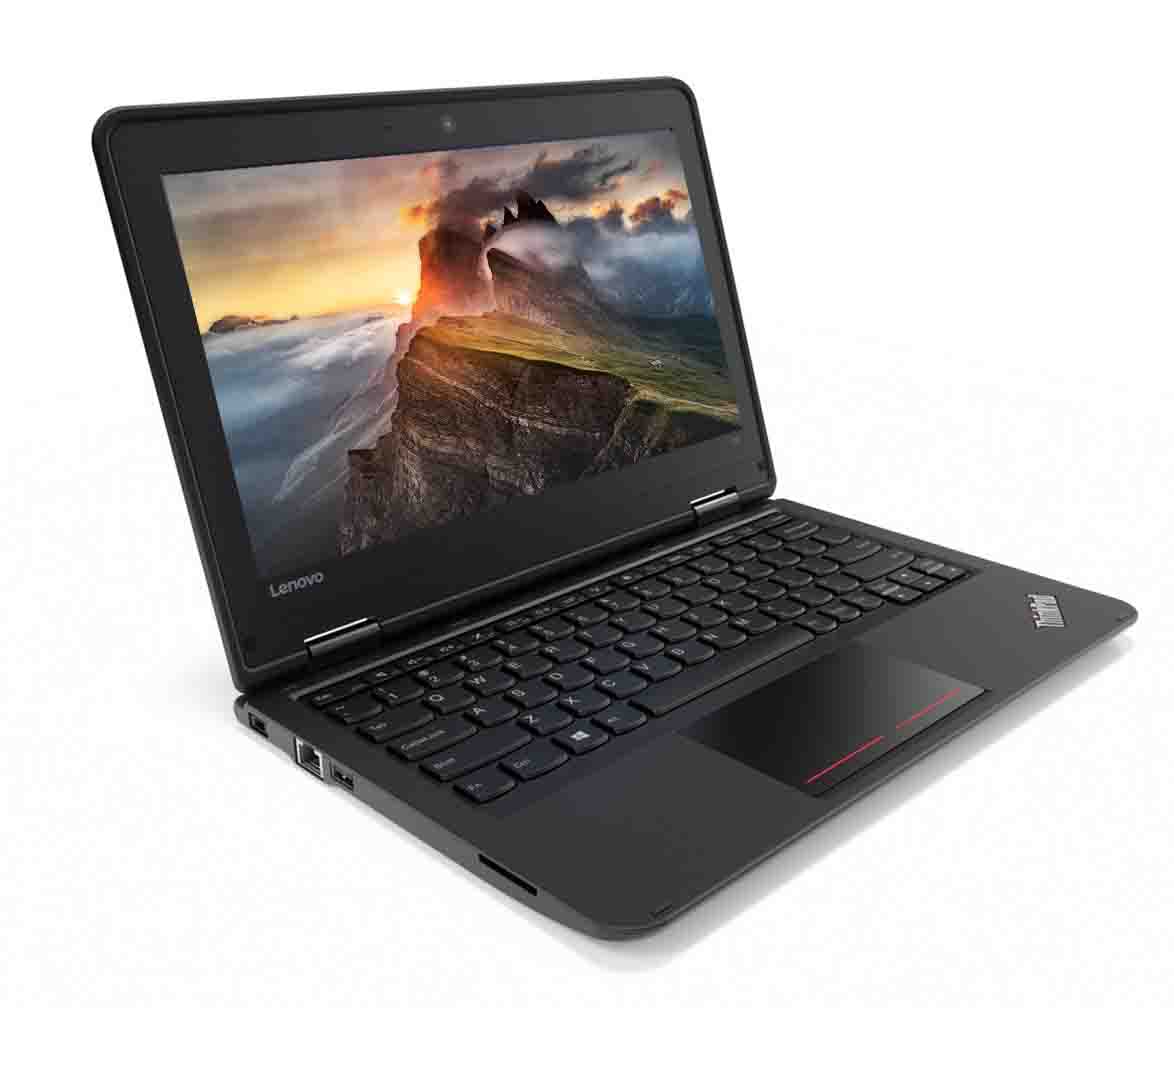 Lenovo ThinkPad 11e Yoga Business Laptop, Intel Celeron CPU, 4GB RAM, 128GB SSD, 11.6 inch Touchscreen 360°, Windows 10 Pro, Refurbished Laptop